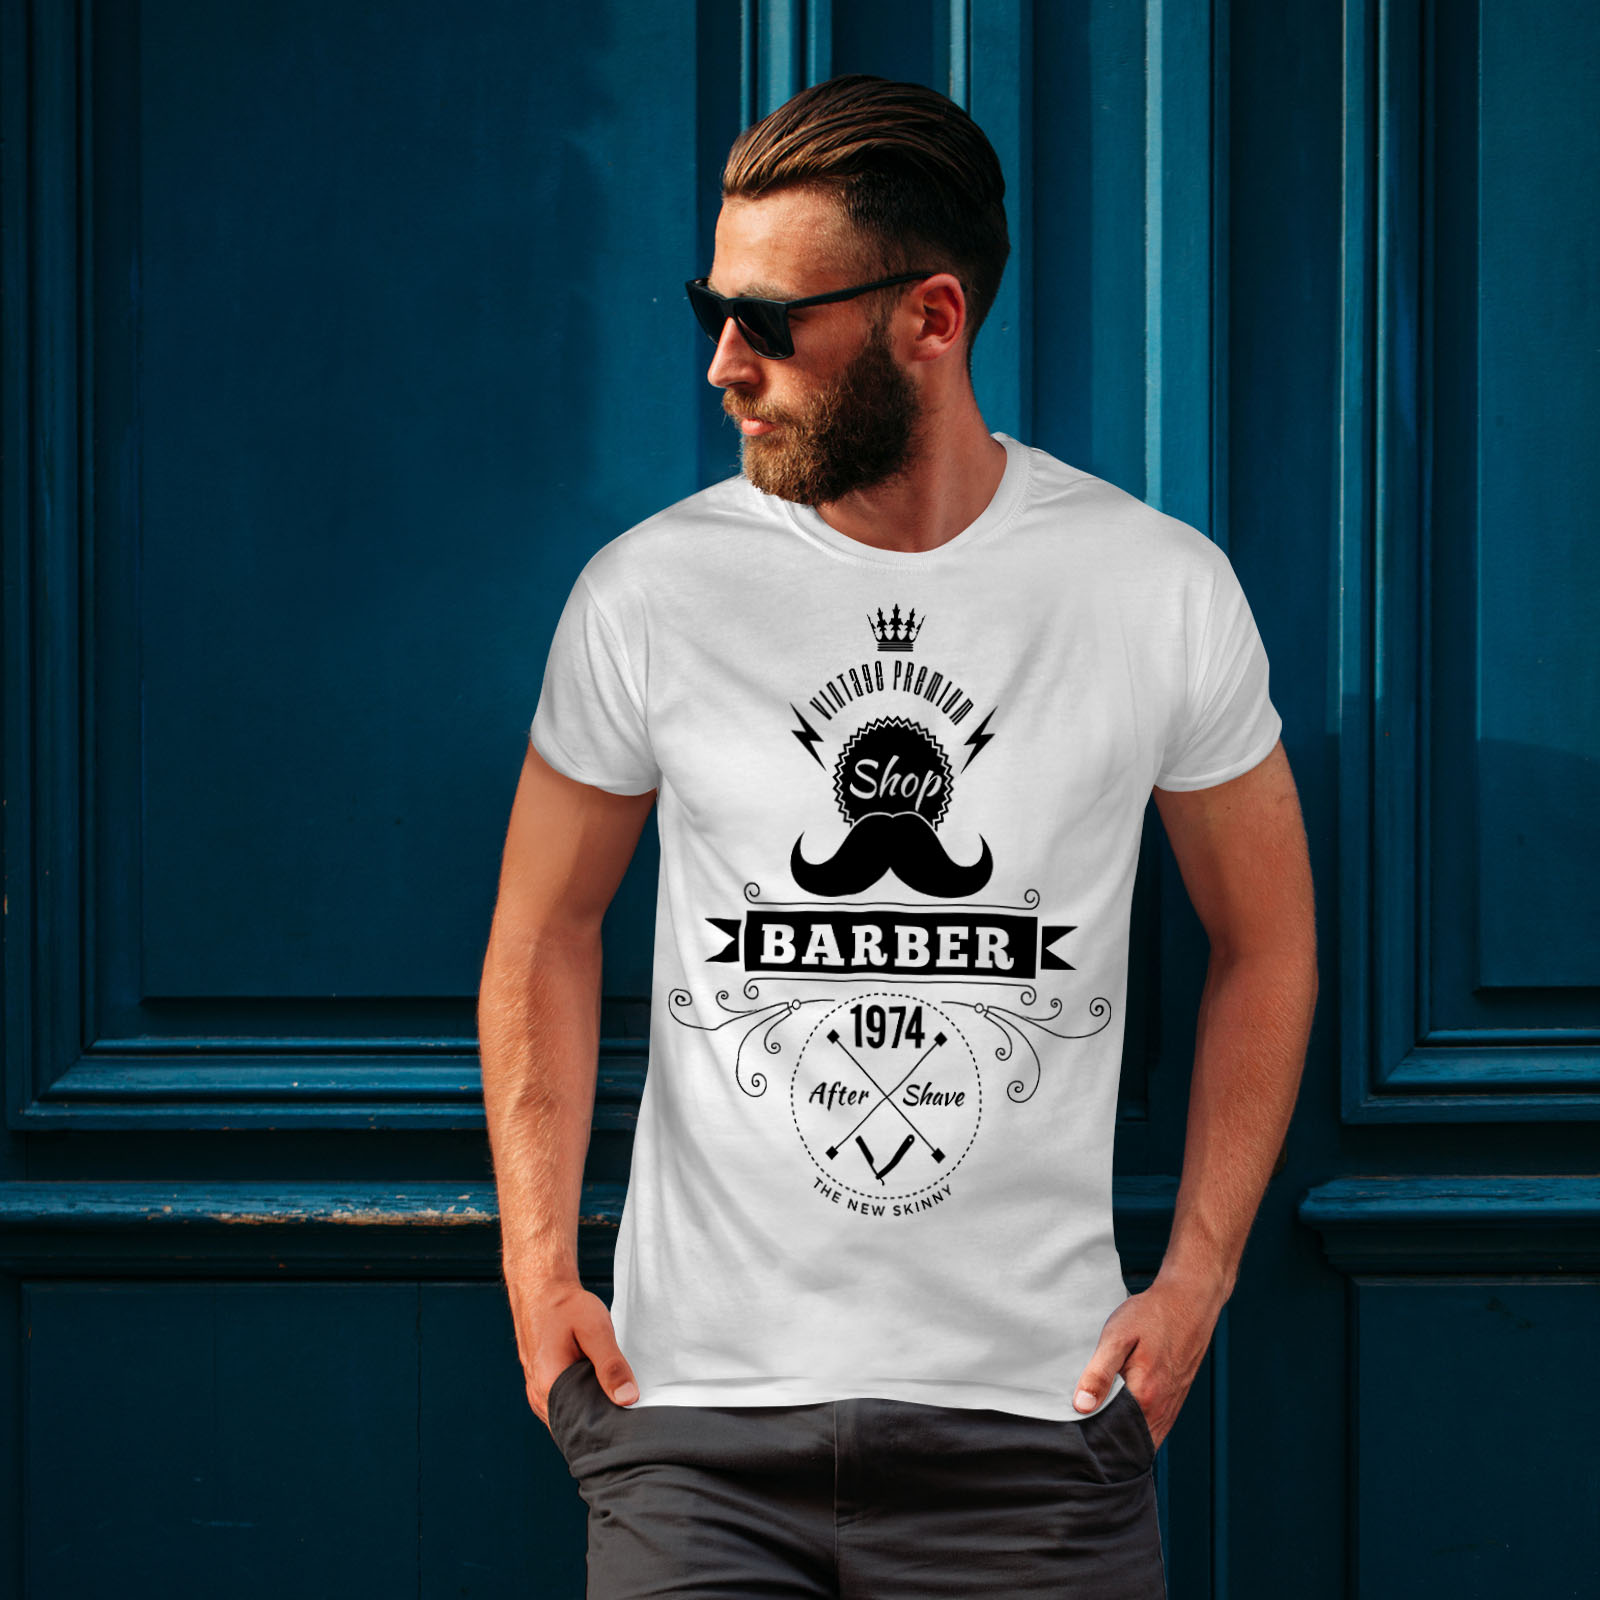 Hippie Graphic Design Printed Tee Wellcoda Barber Shop Mens T-shirt